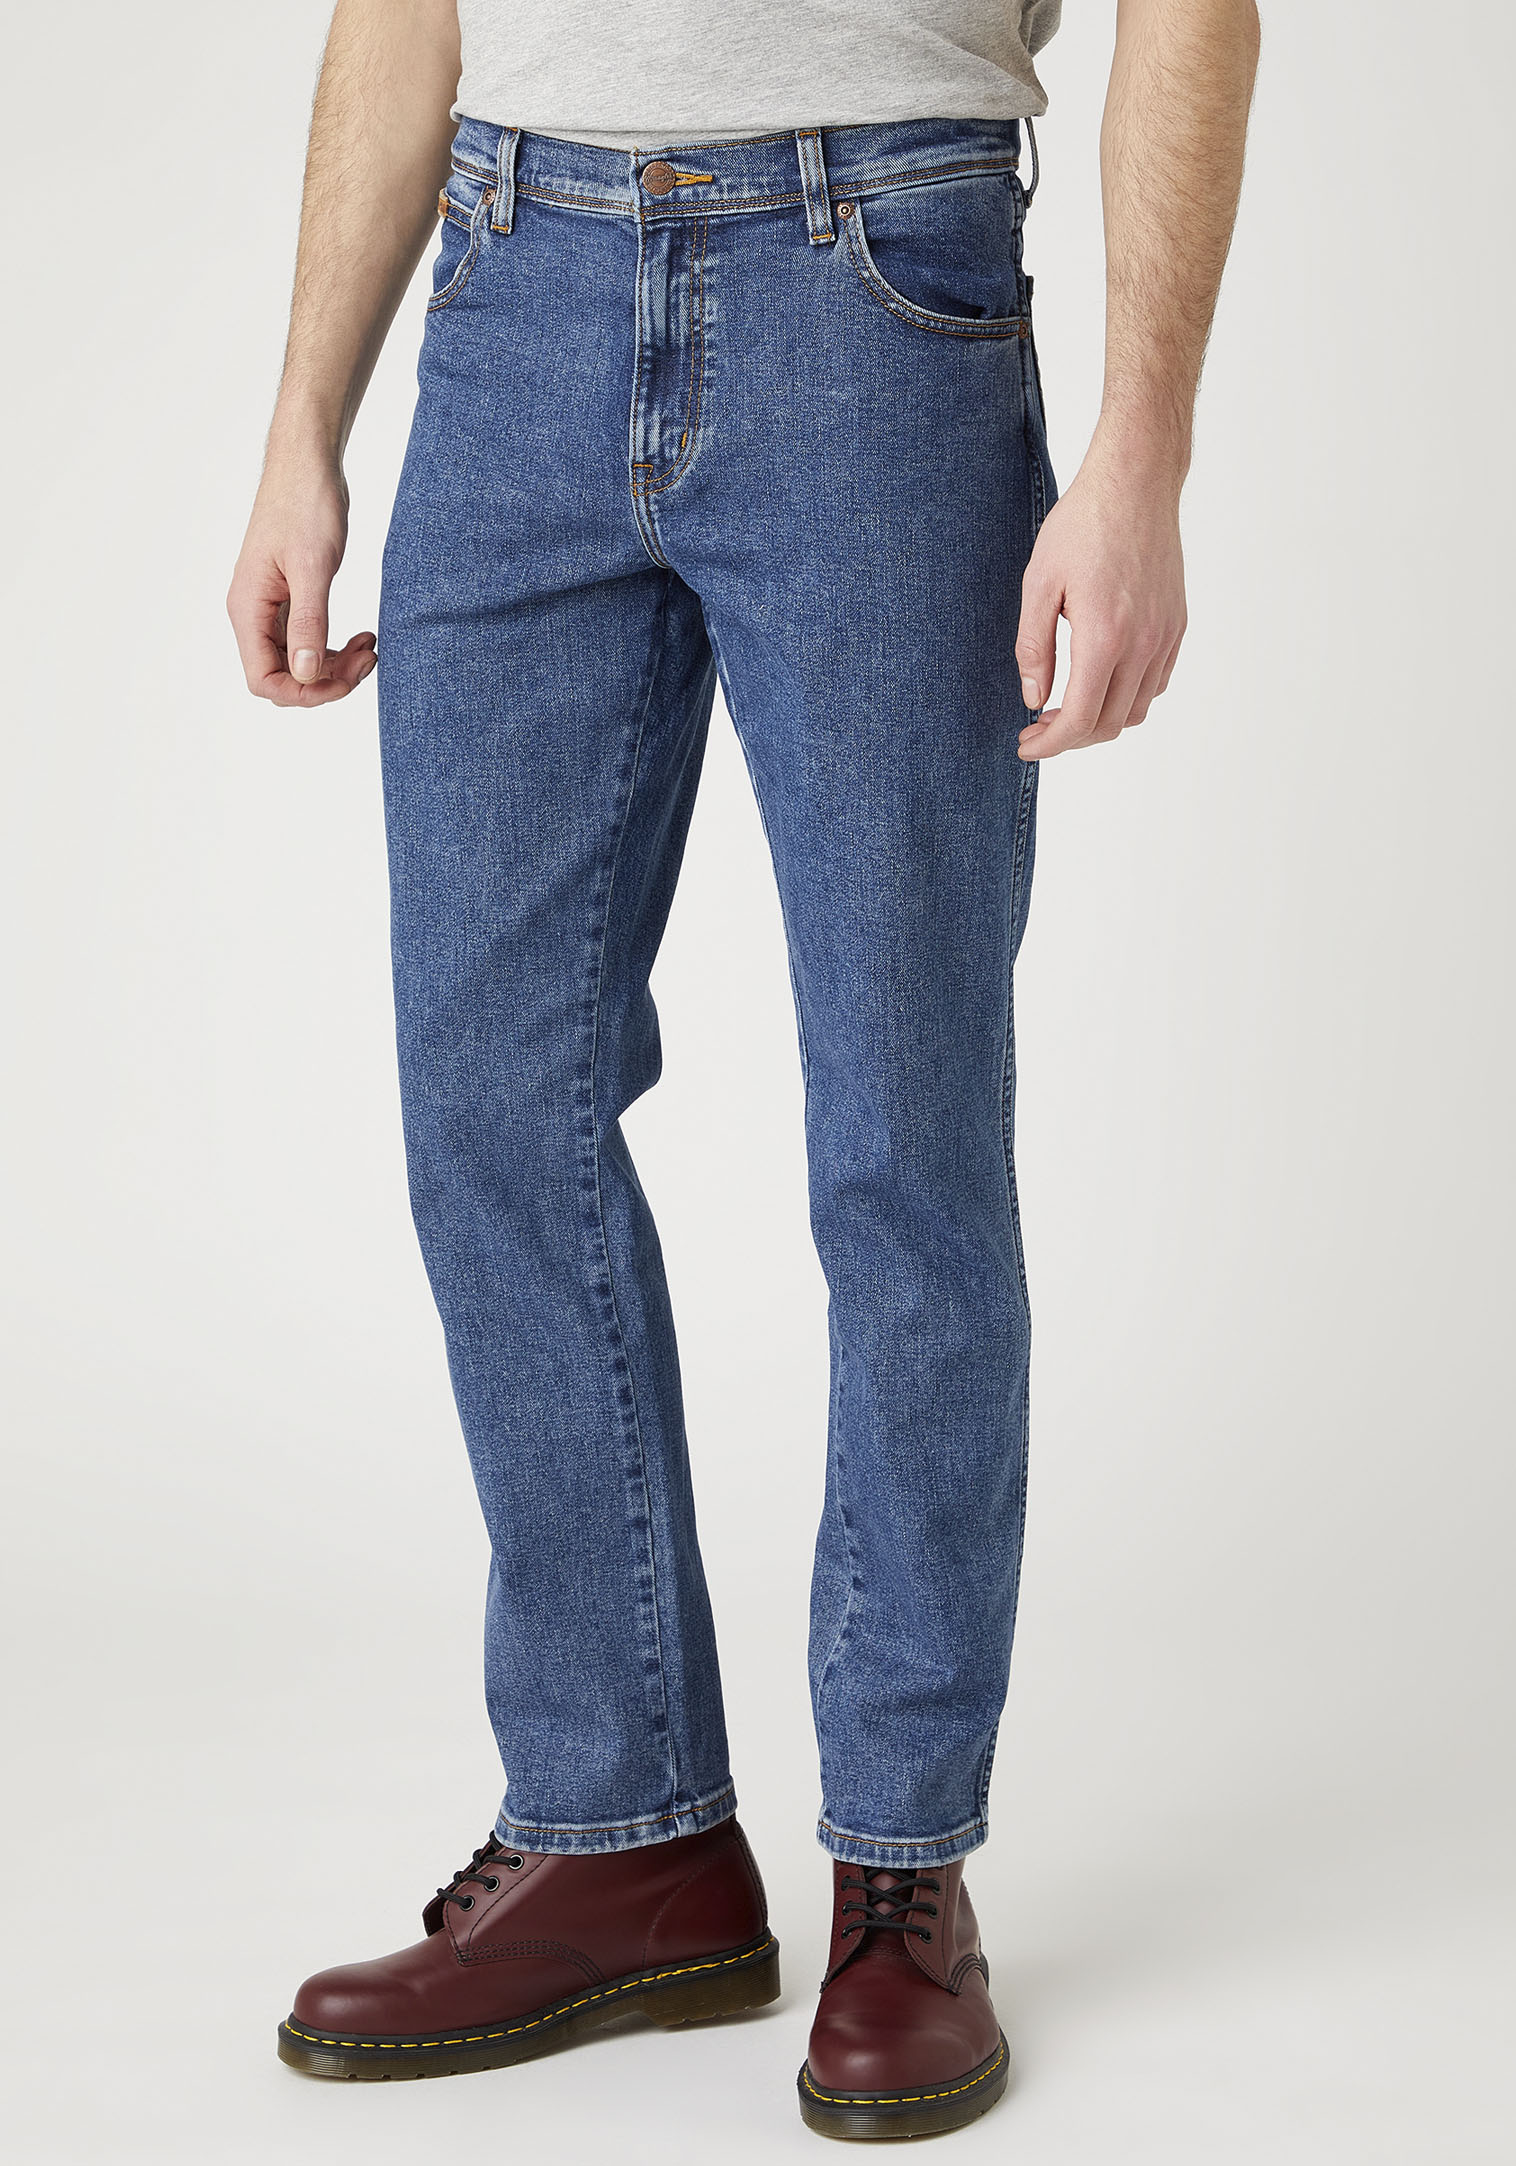 Wrangler Herren Texas Slim Jeans, Stonewash, 31W / 32L